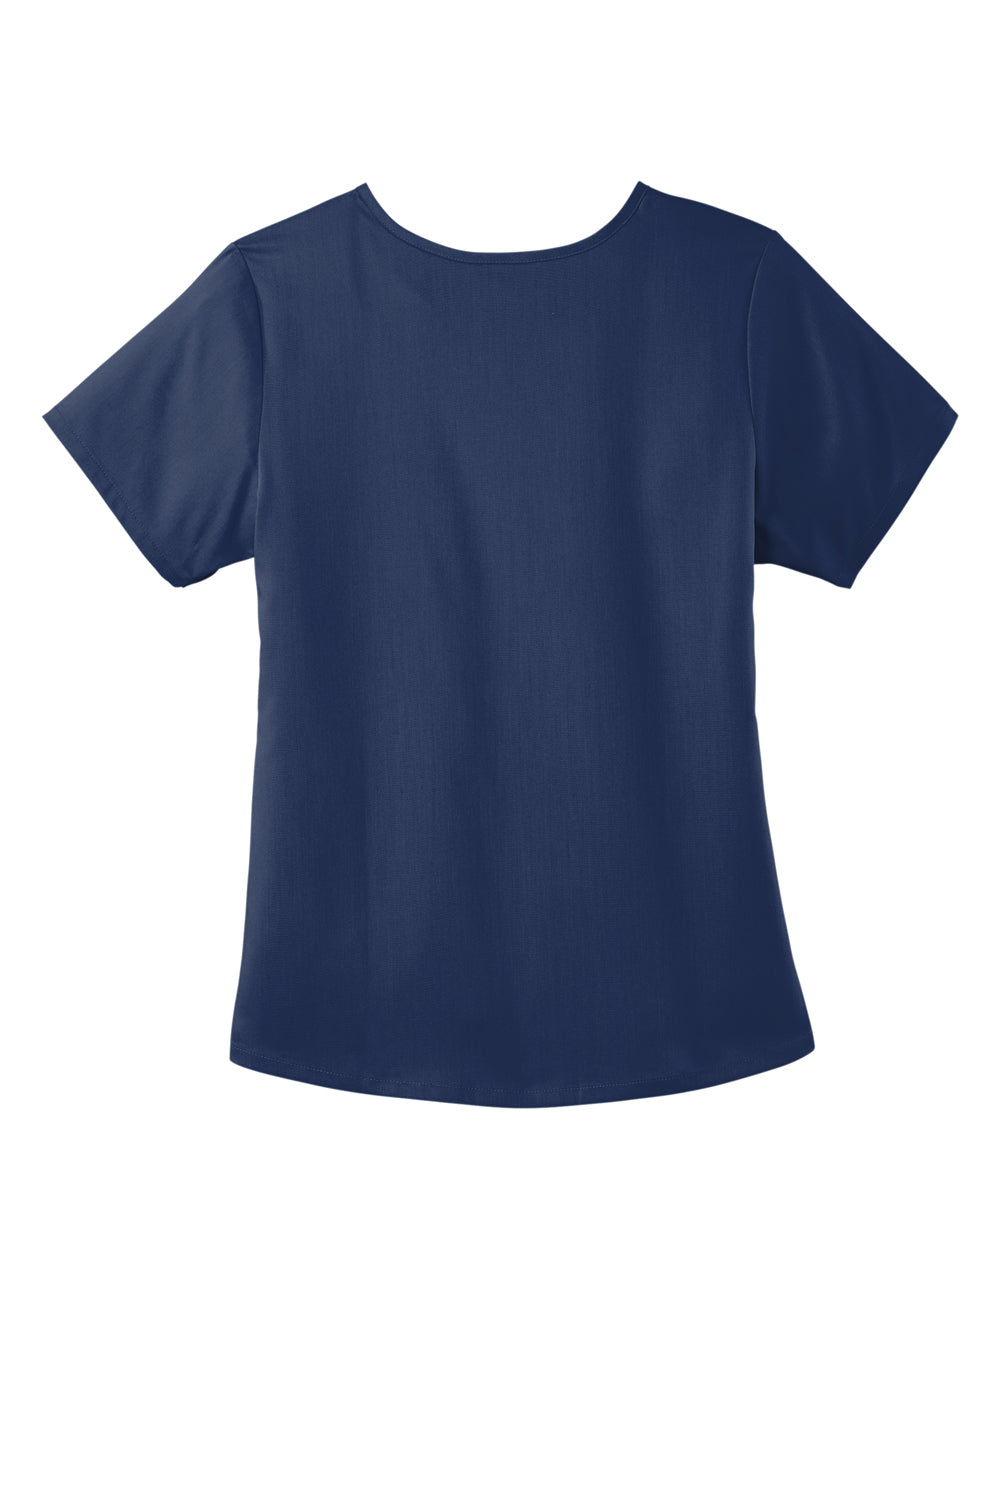 Wonderwink WW4268 Premiere Flex Short Sleeve V-Neck Mock Wrap Shirt Navy Blue Flat Back